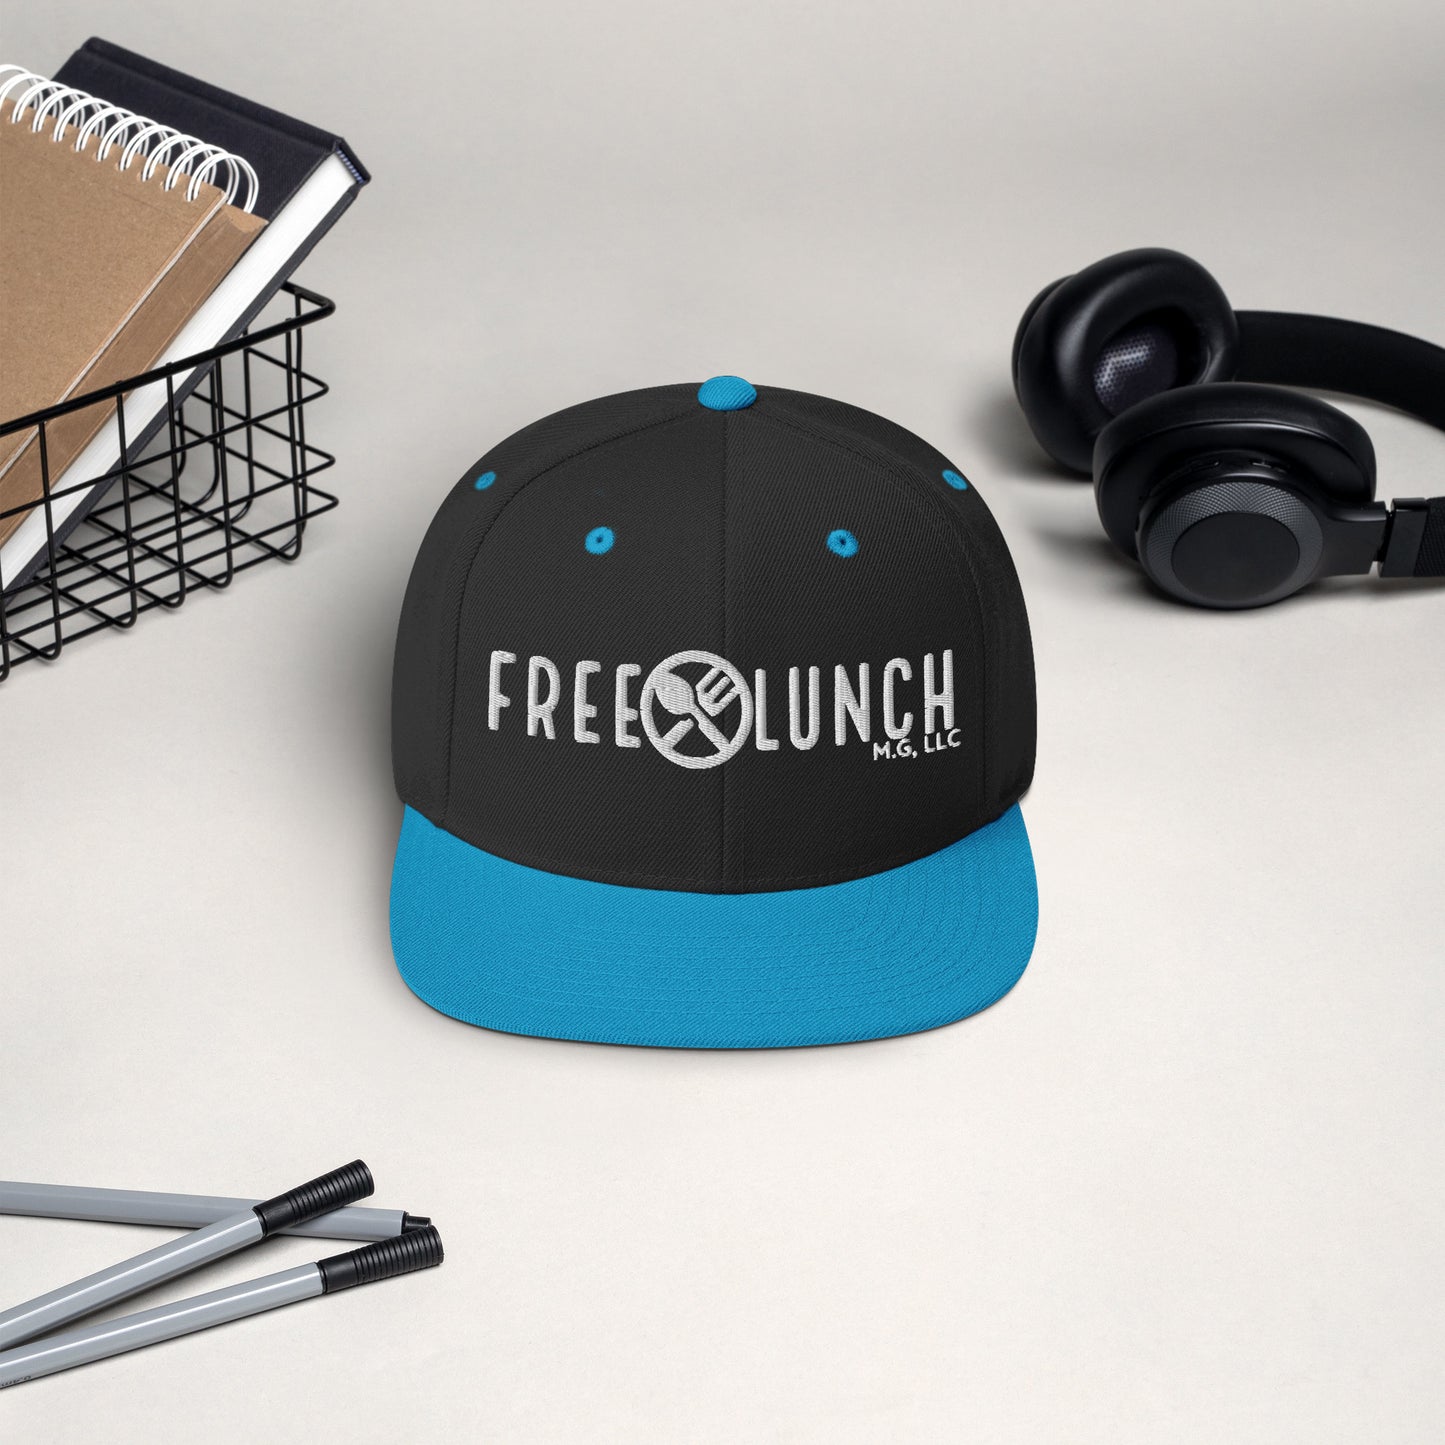 Free Lunch MG, LLC Snapback Hat